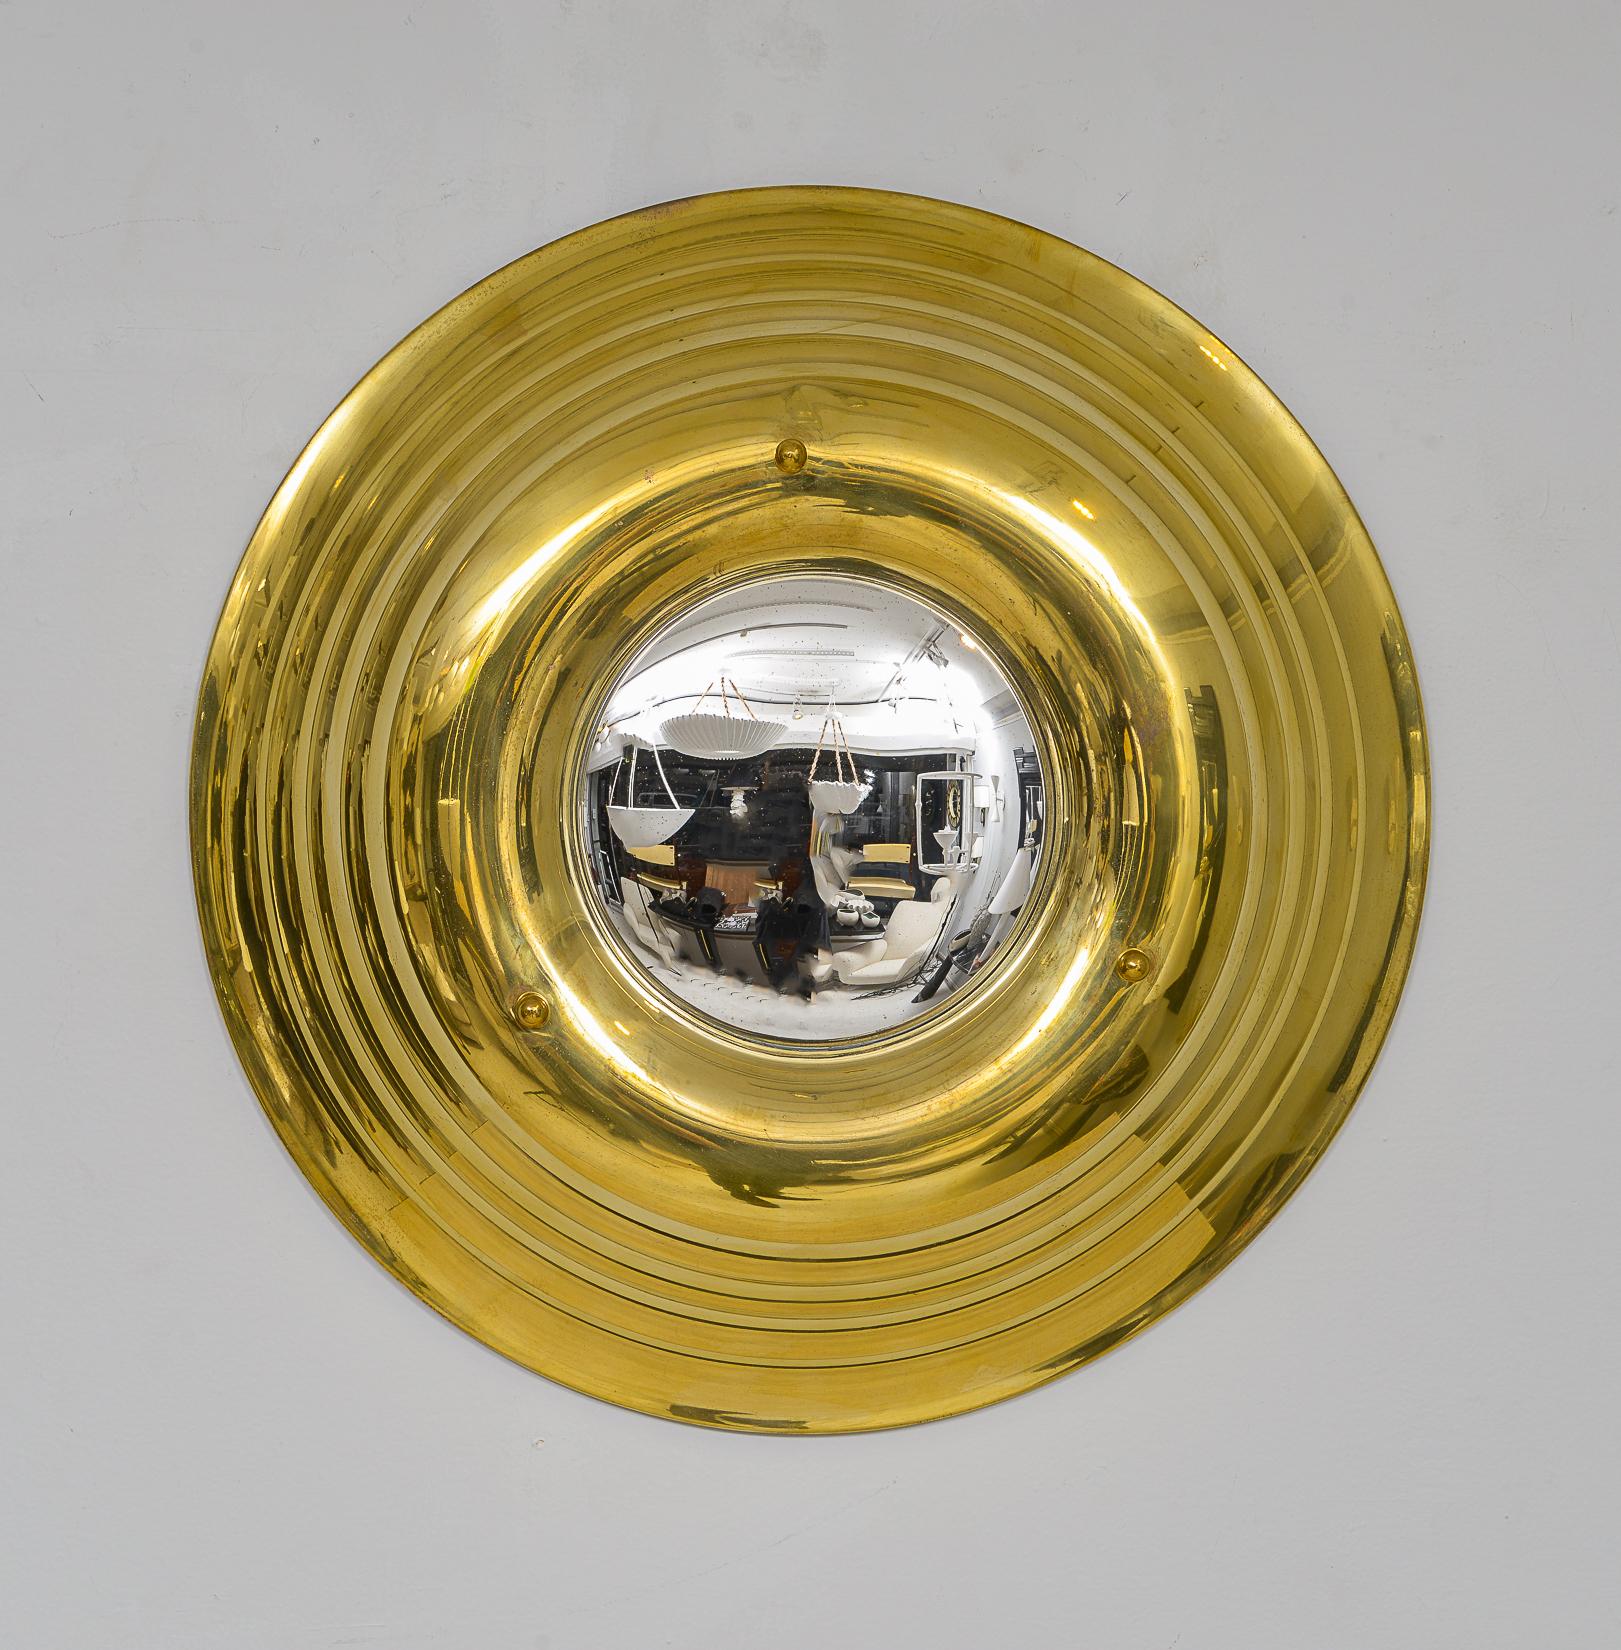 Vintage French Brass Circular Convex Mirror 1950's - 60's